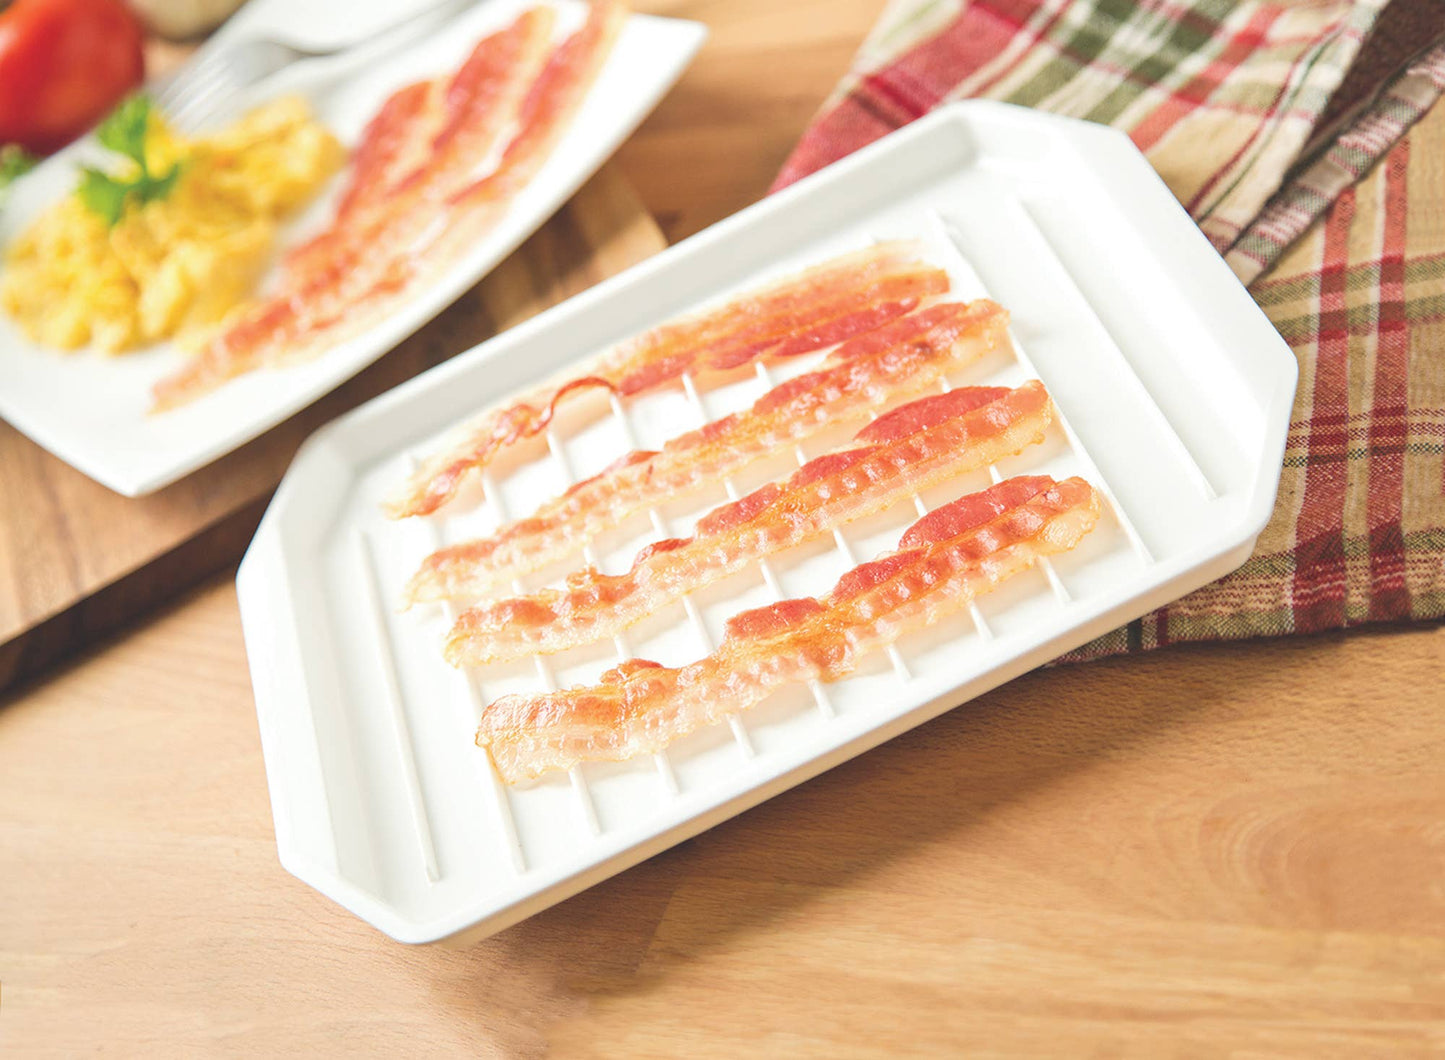 Microwave Bacon Rack